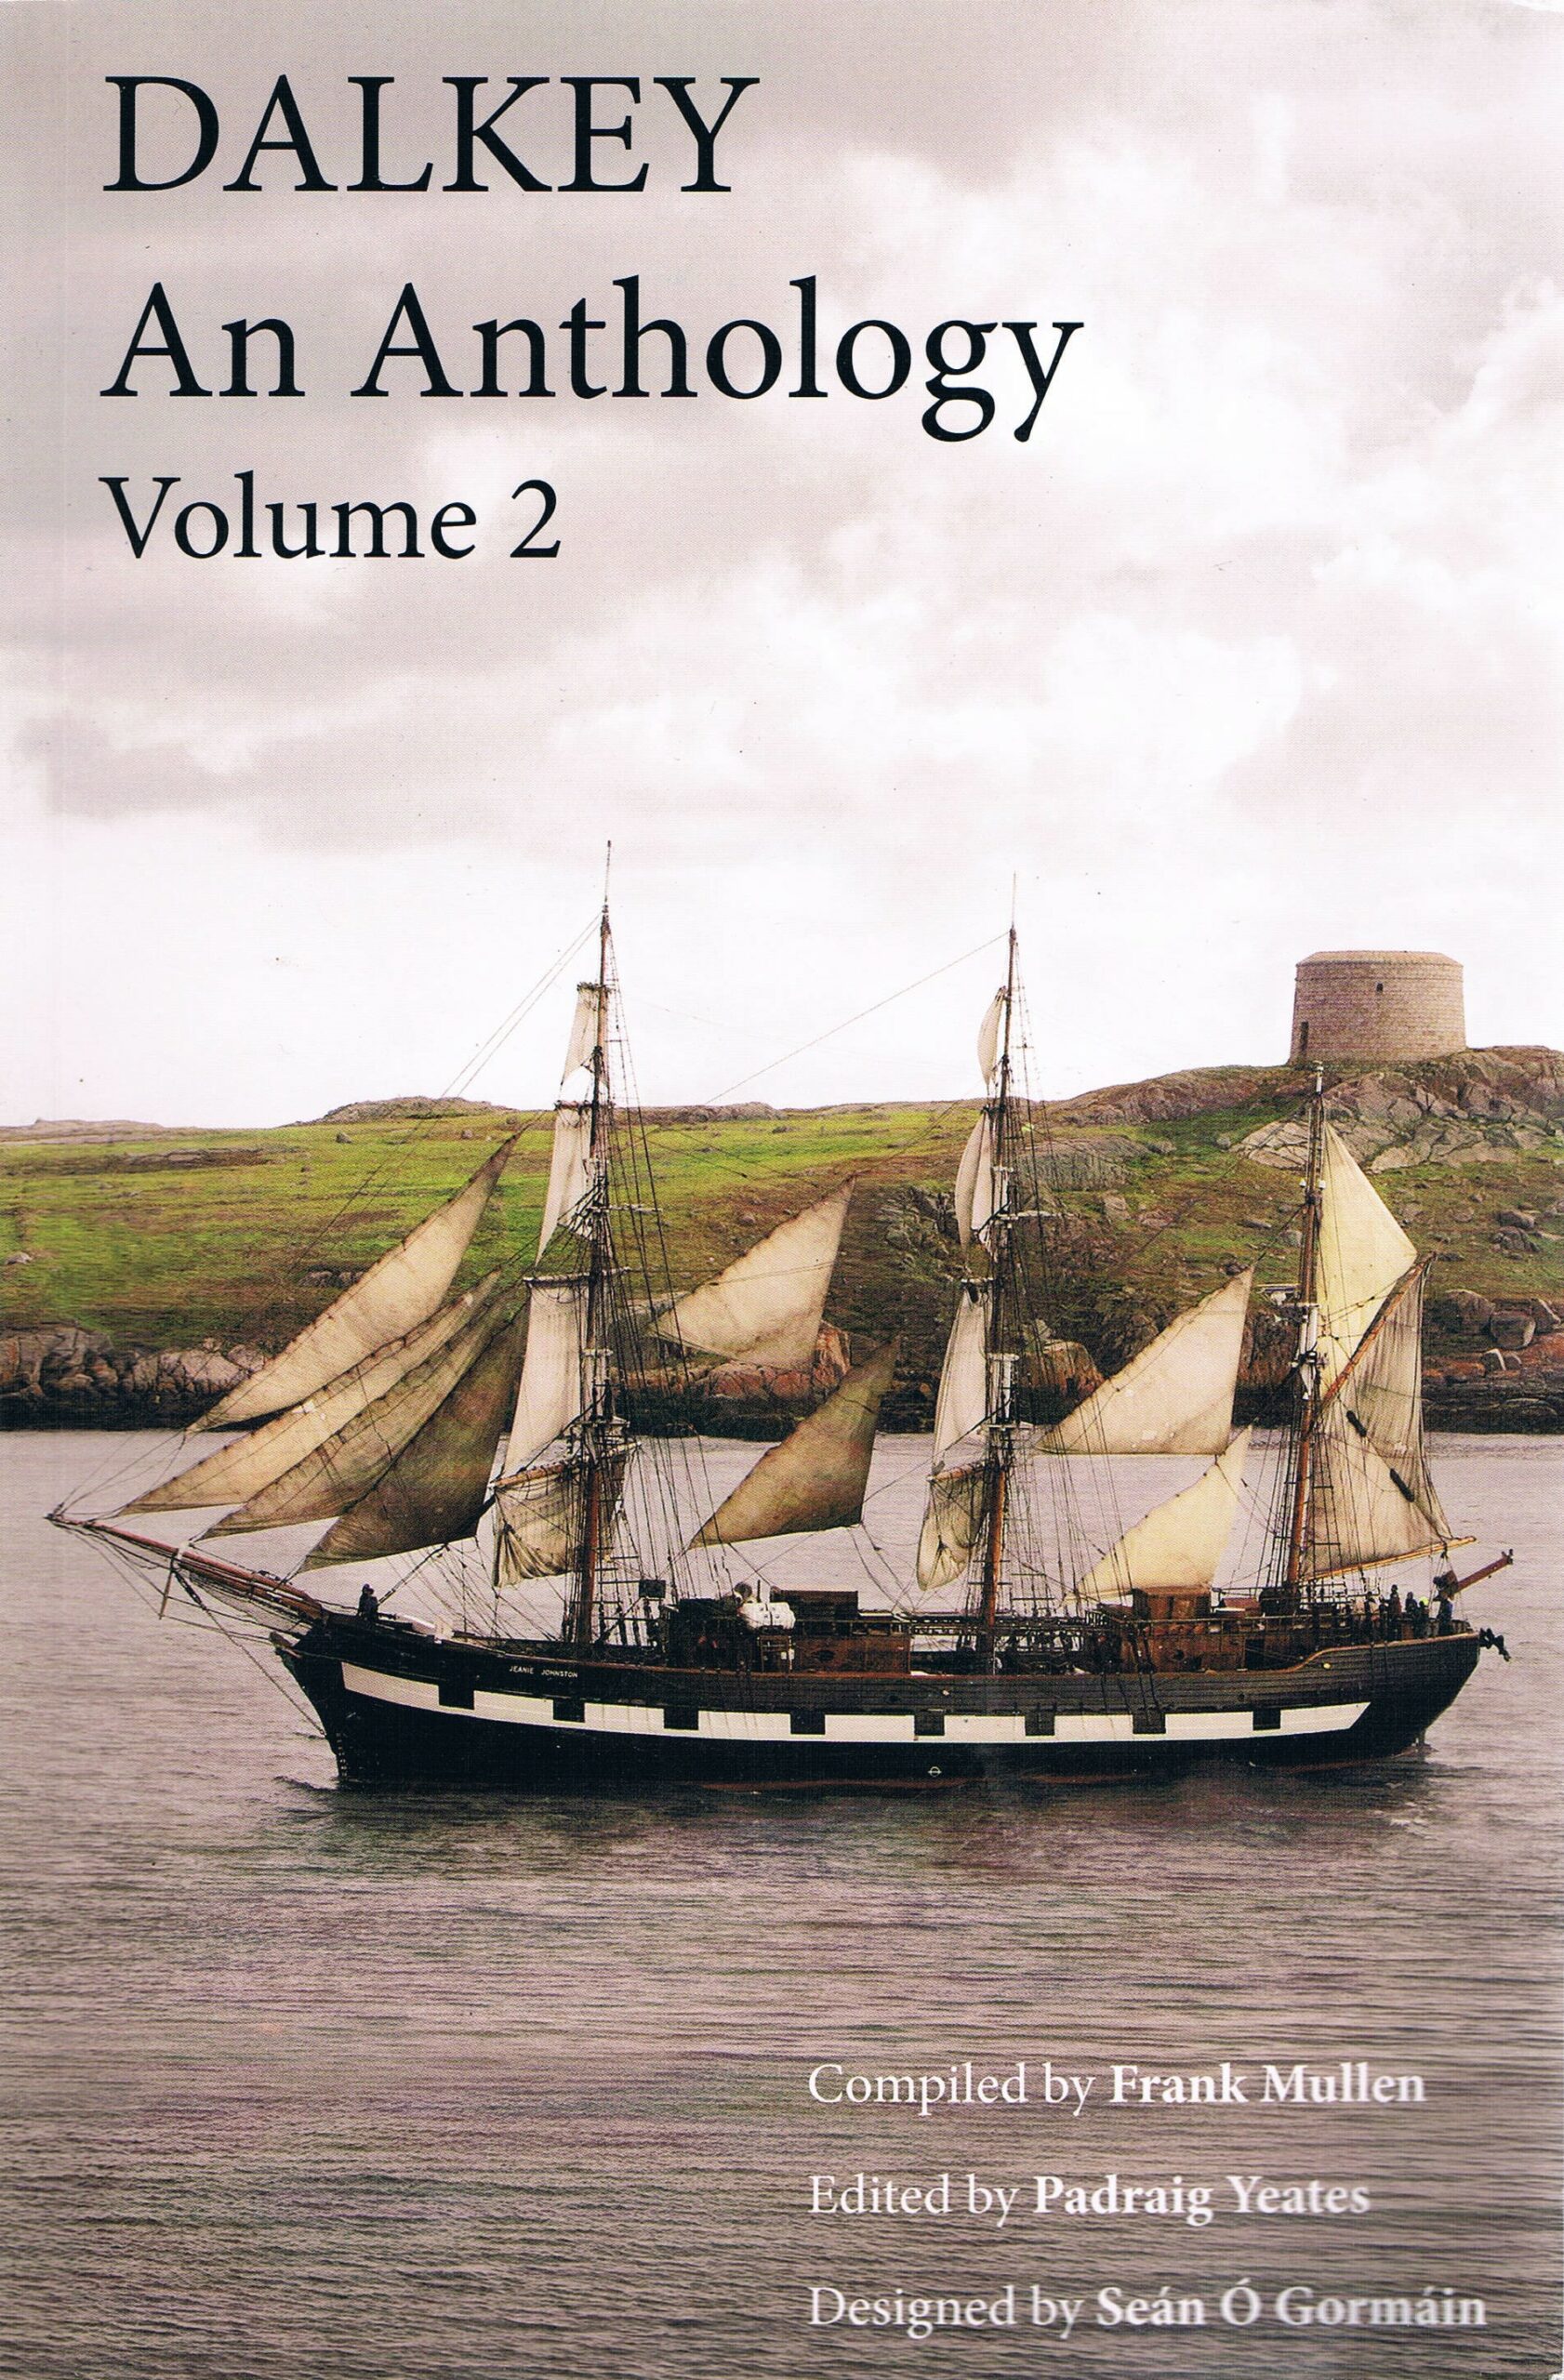 Dalkey: An Anthology, Volume 2 by Padraig Yeates